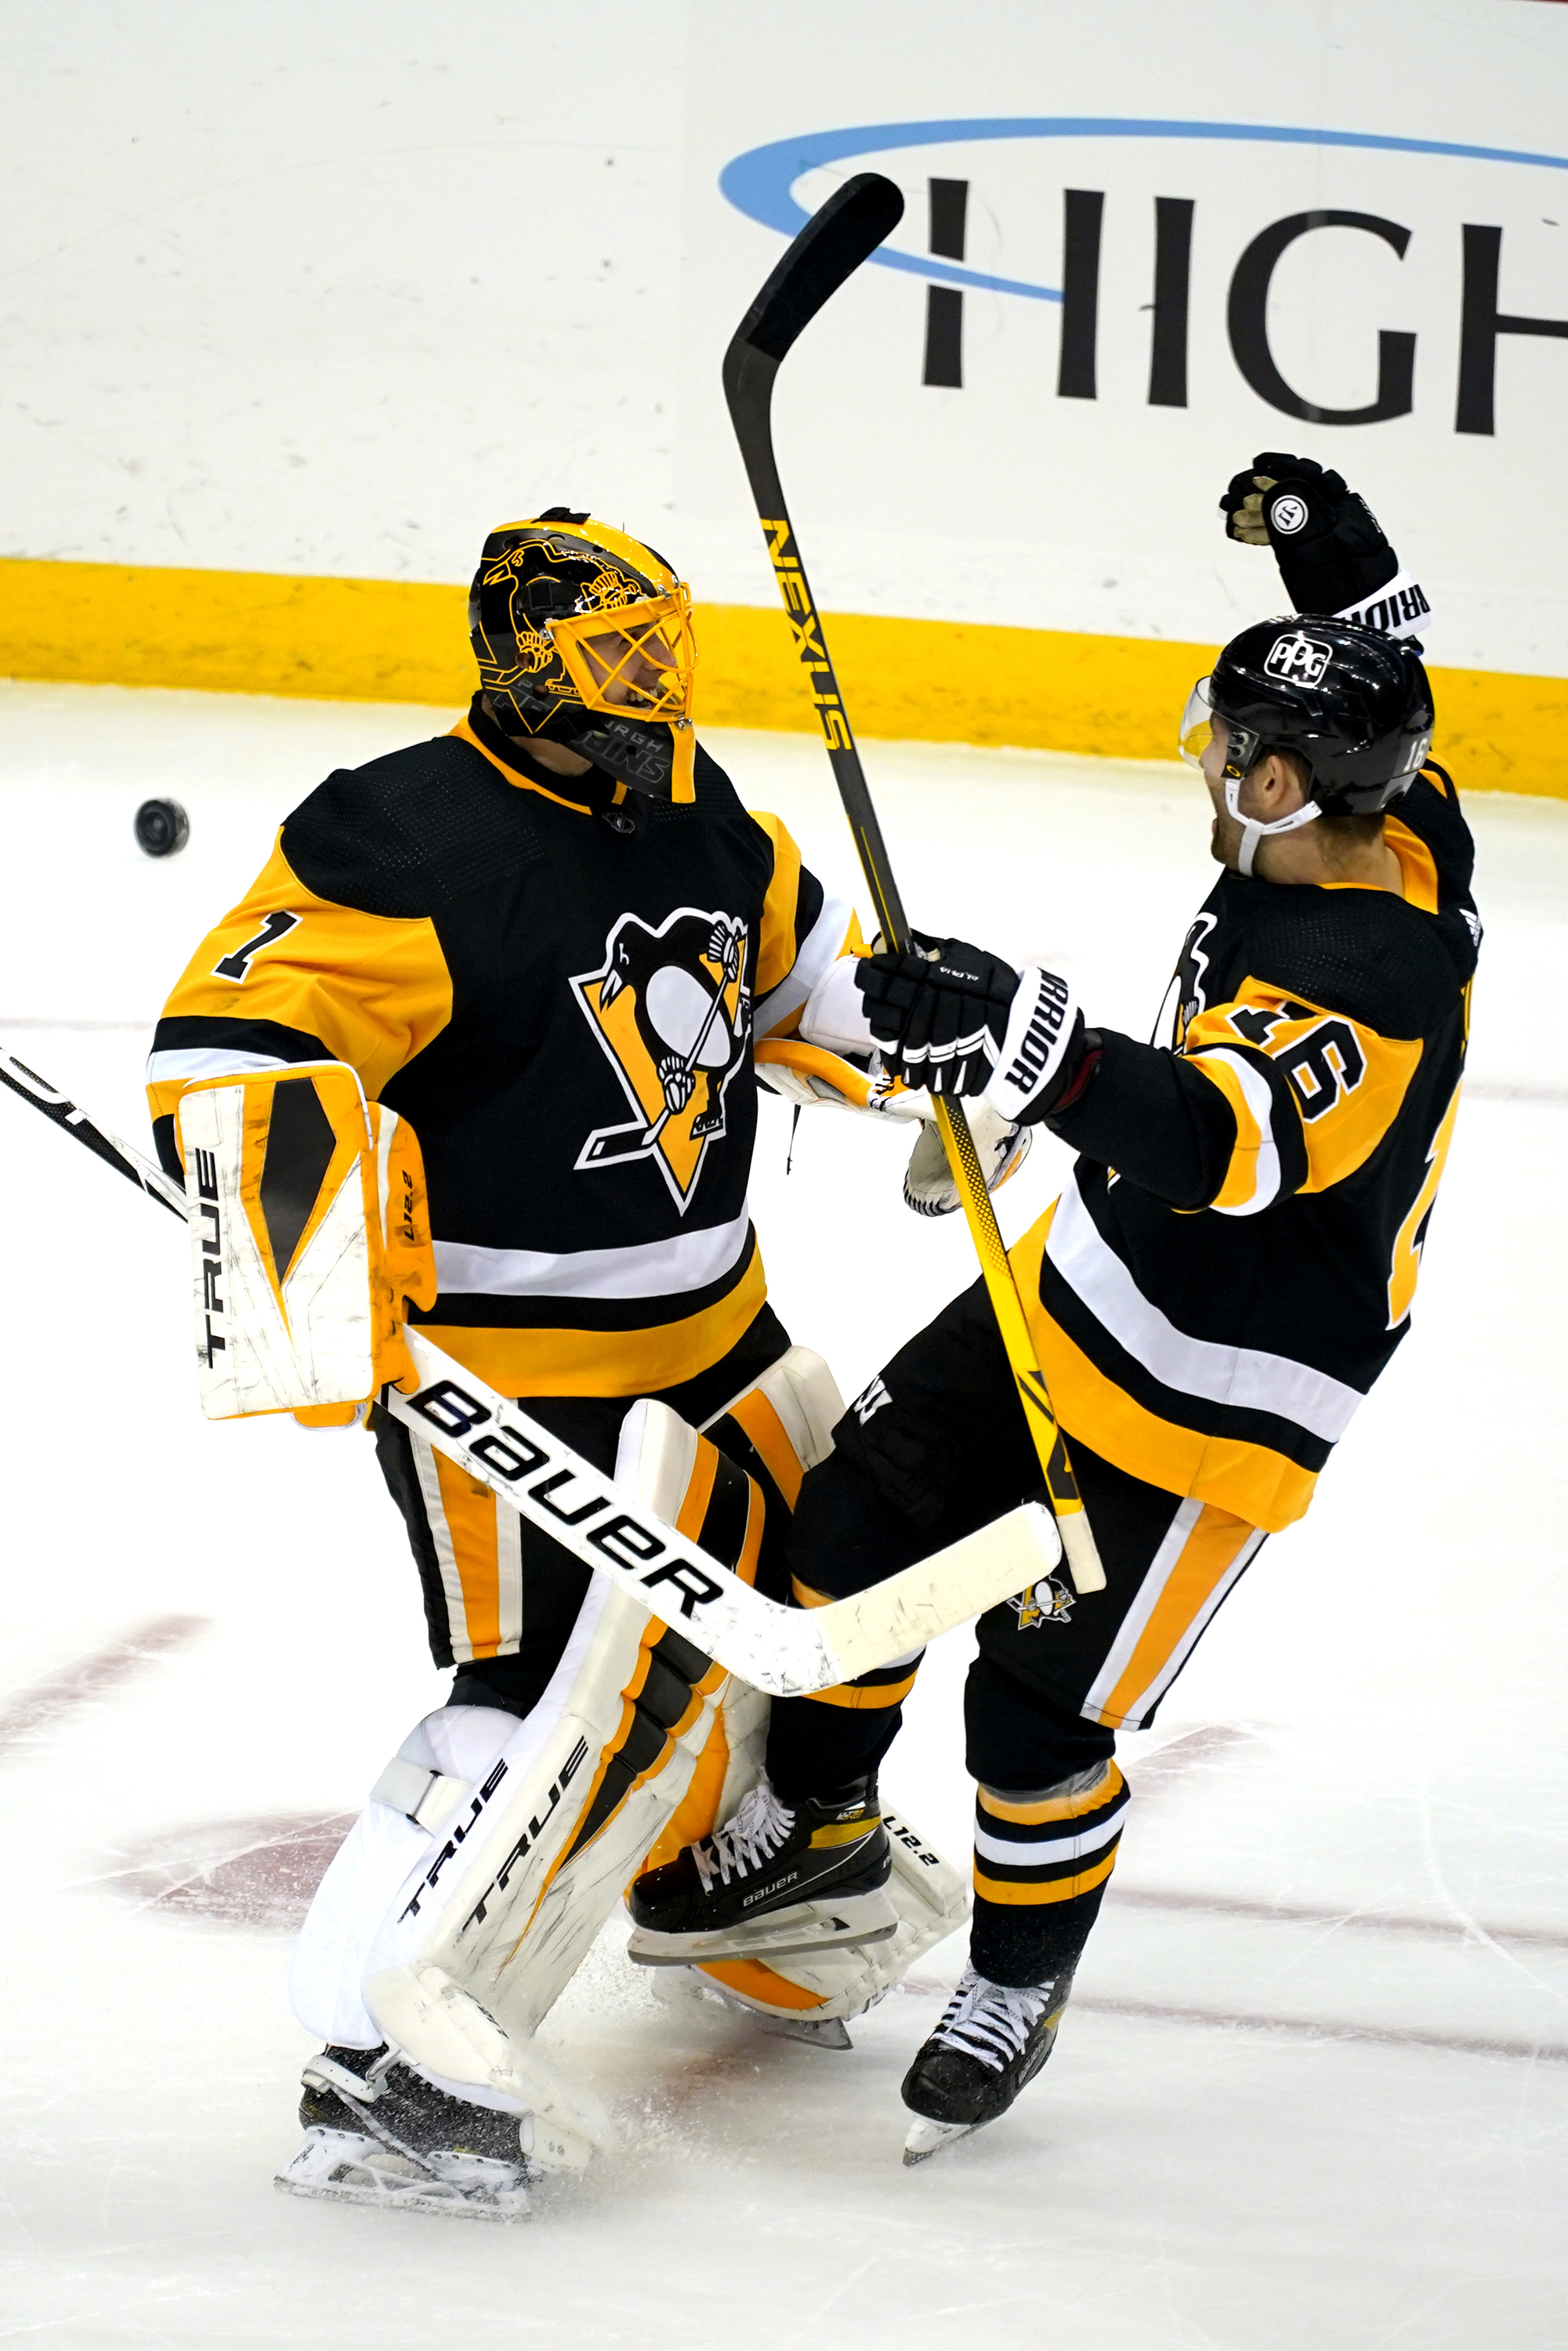 Pittsburgh Penguins on X: Kapanen, Kasperi Kapanen. Did you know